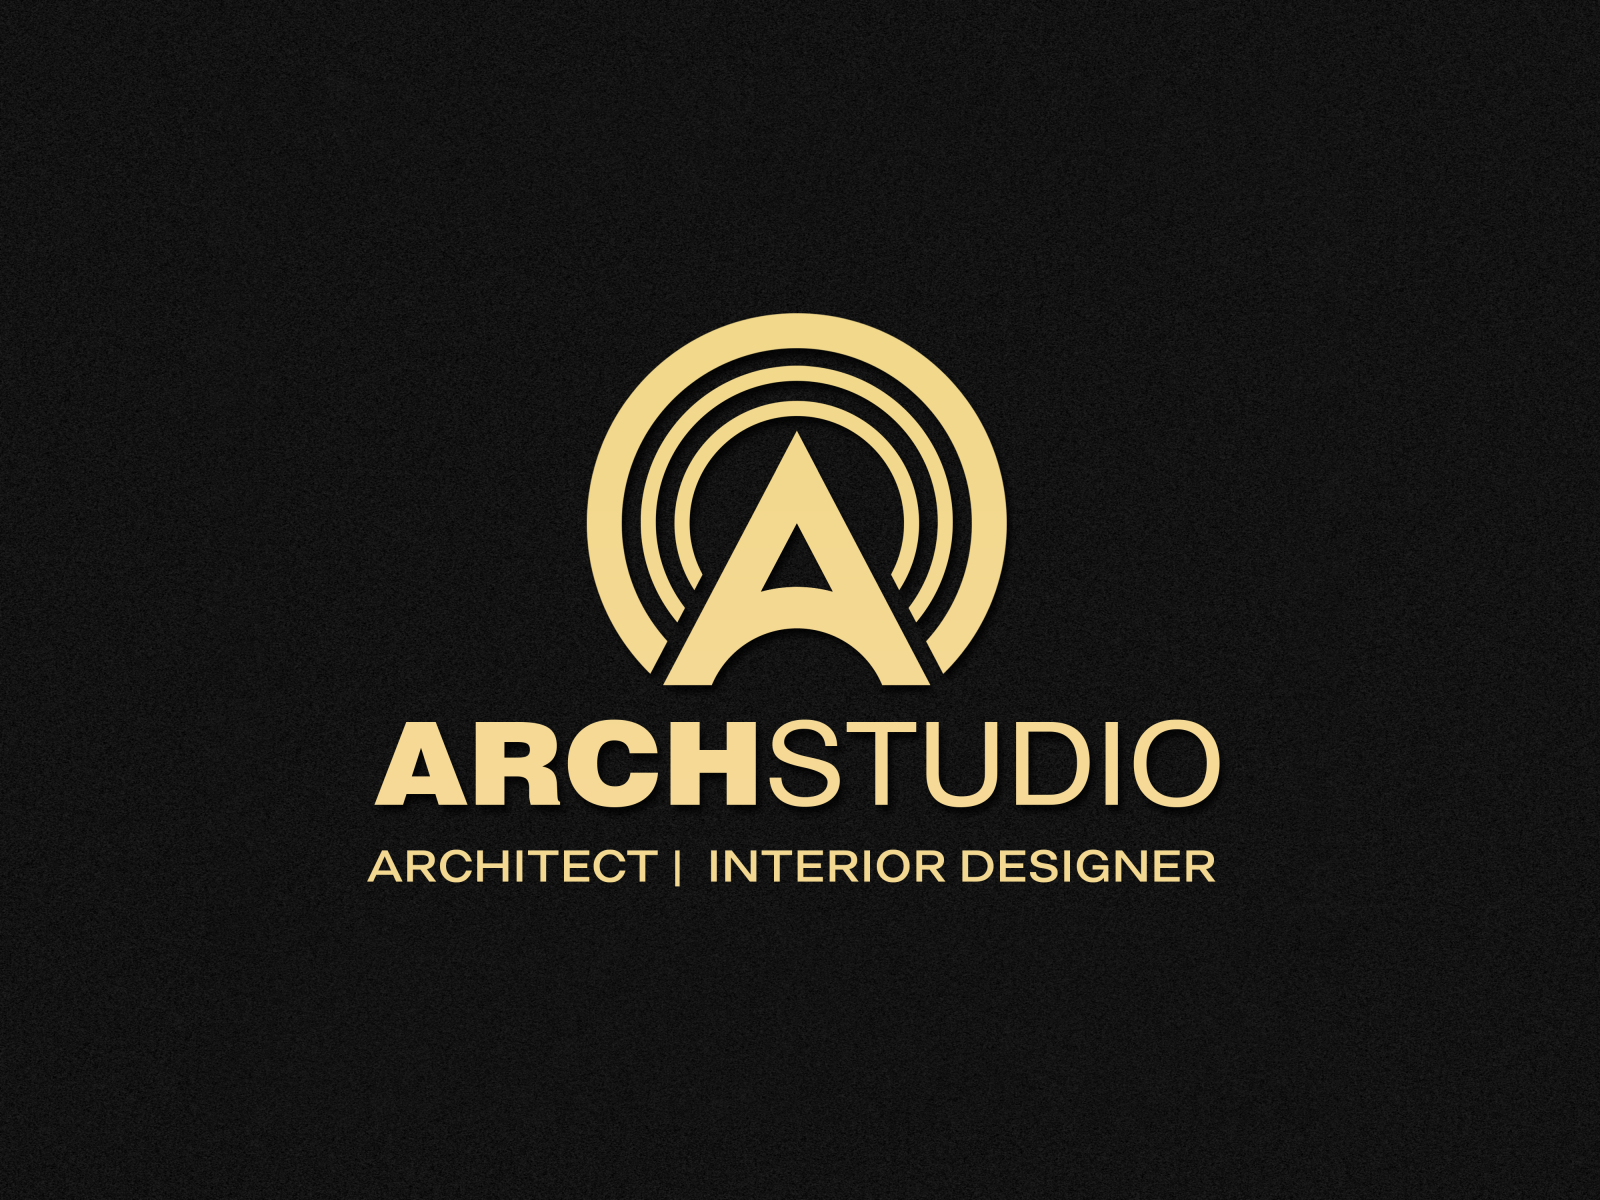 Arch Studio Logo by Vivek Kesarwani on Dribbble